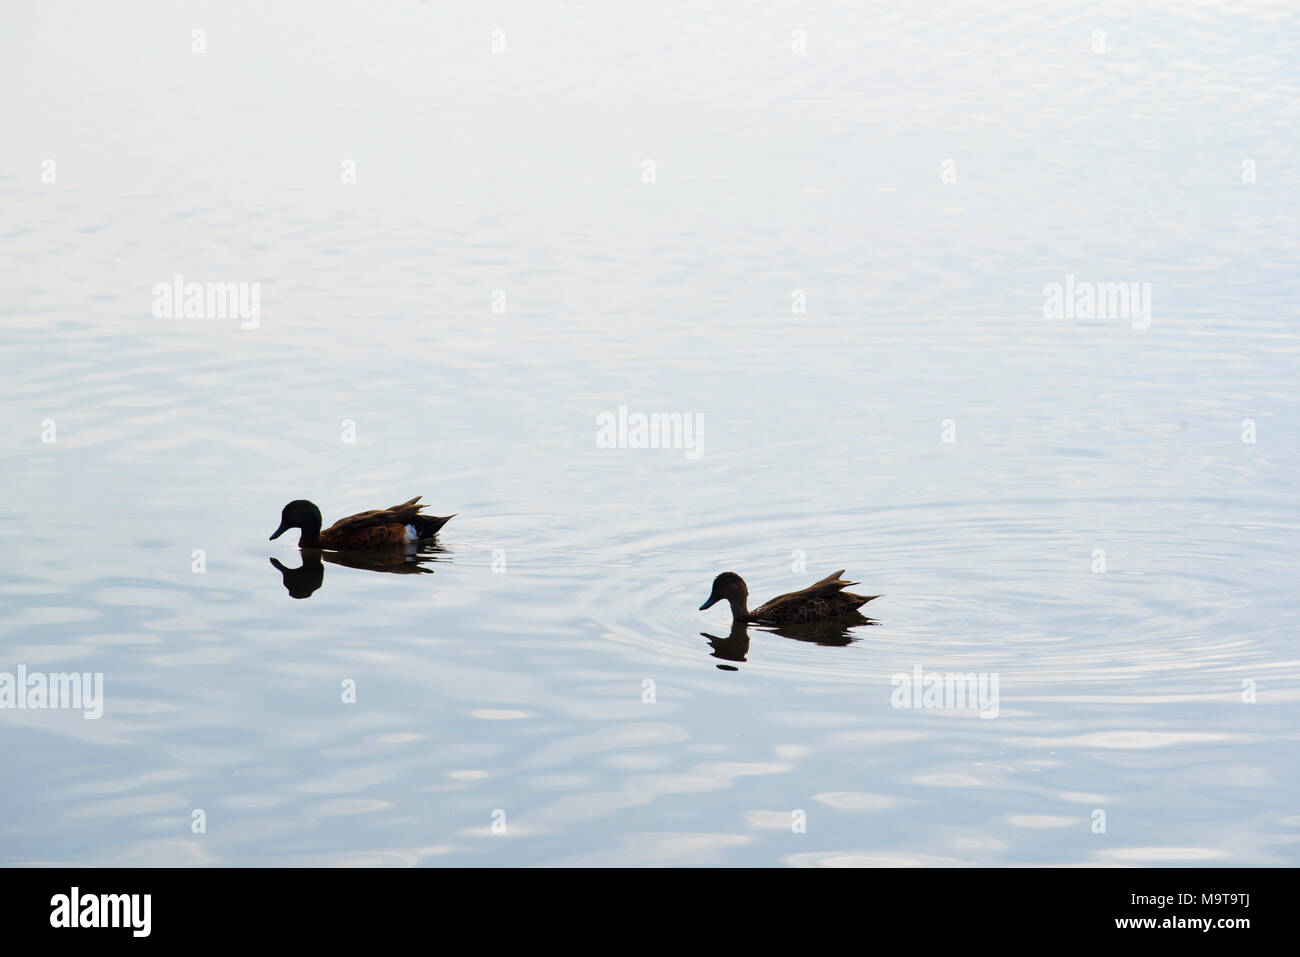 Two native Australian ducks silhouetted on Lake Macquarie in NSW, Australia Stock Photo